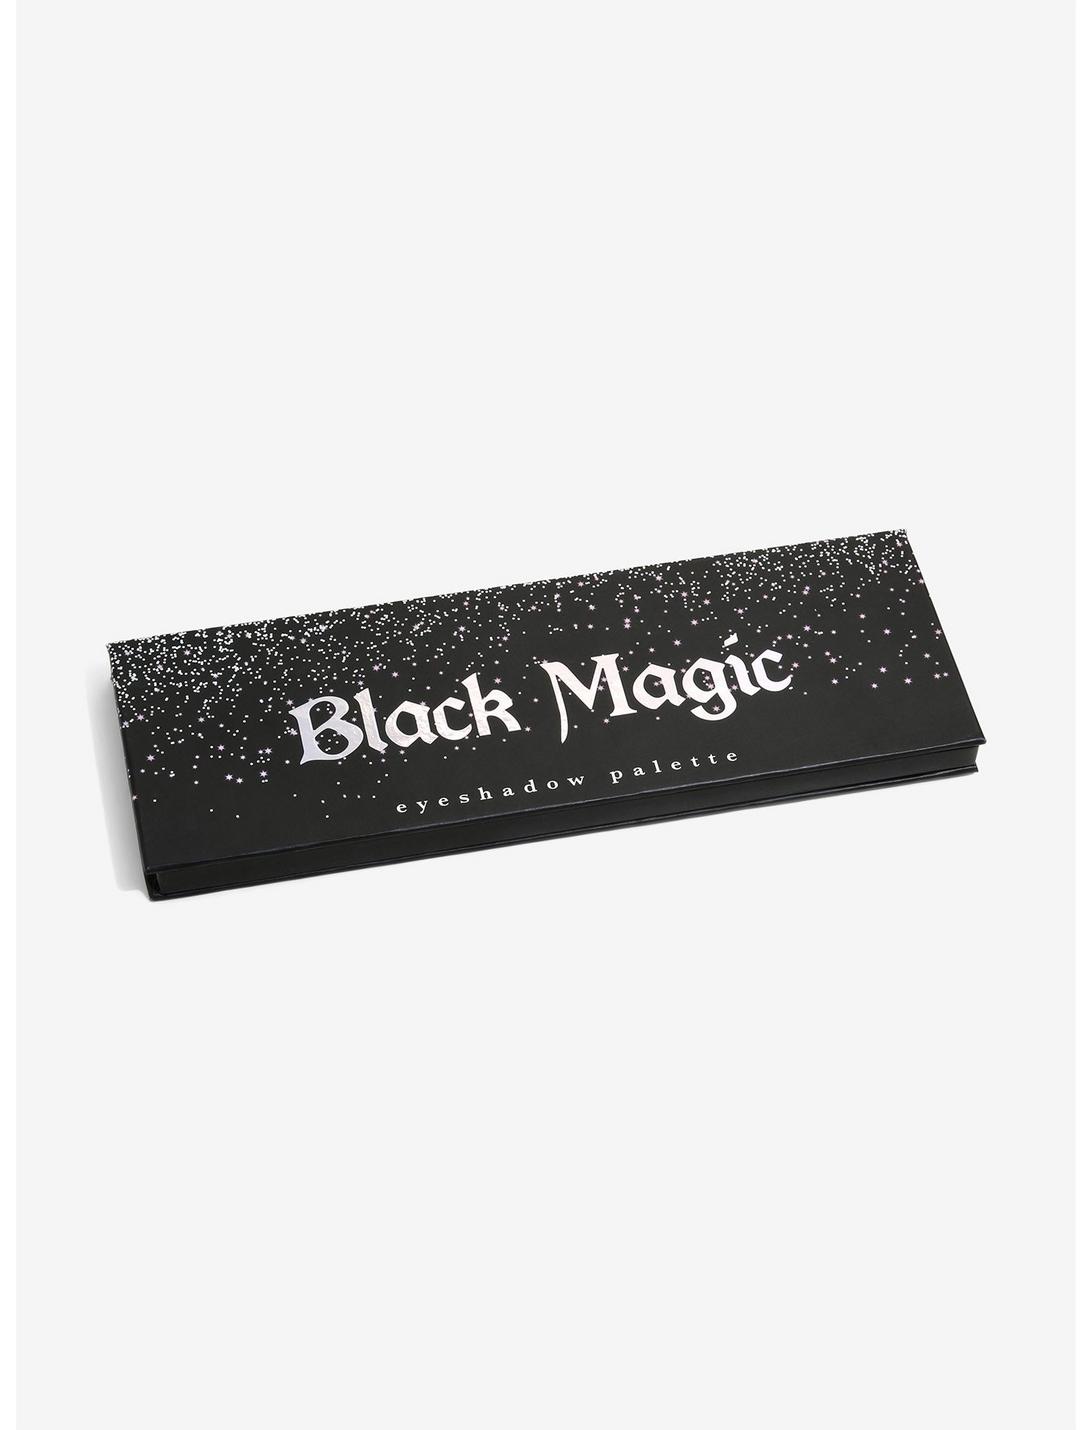 Black Magic Eyeshadow Palette, , hi-res